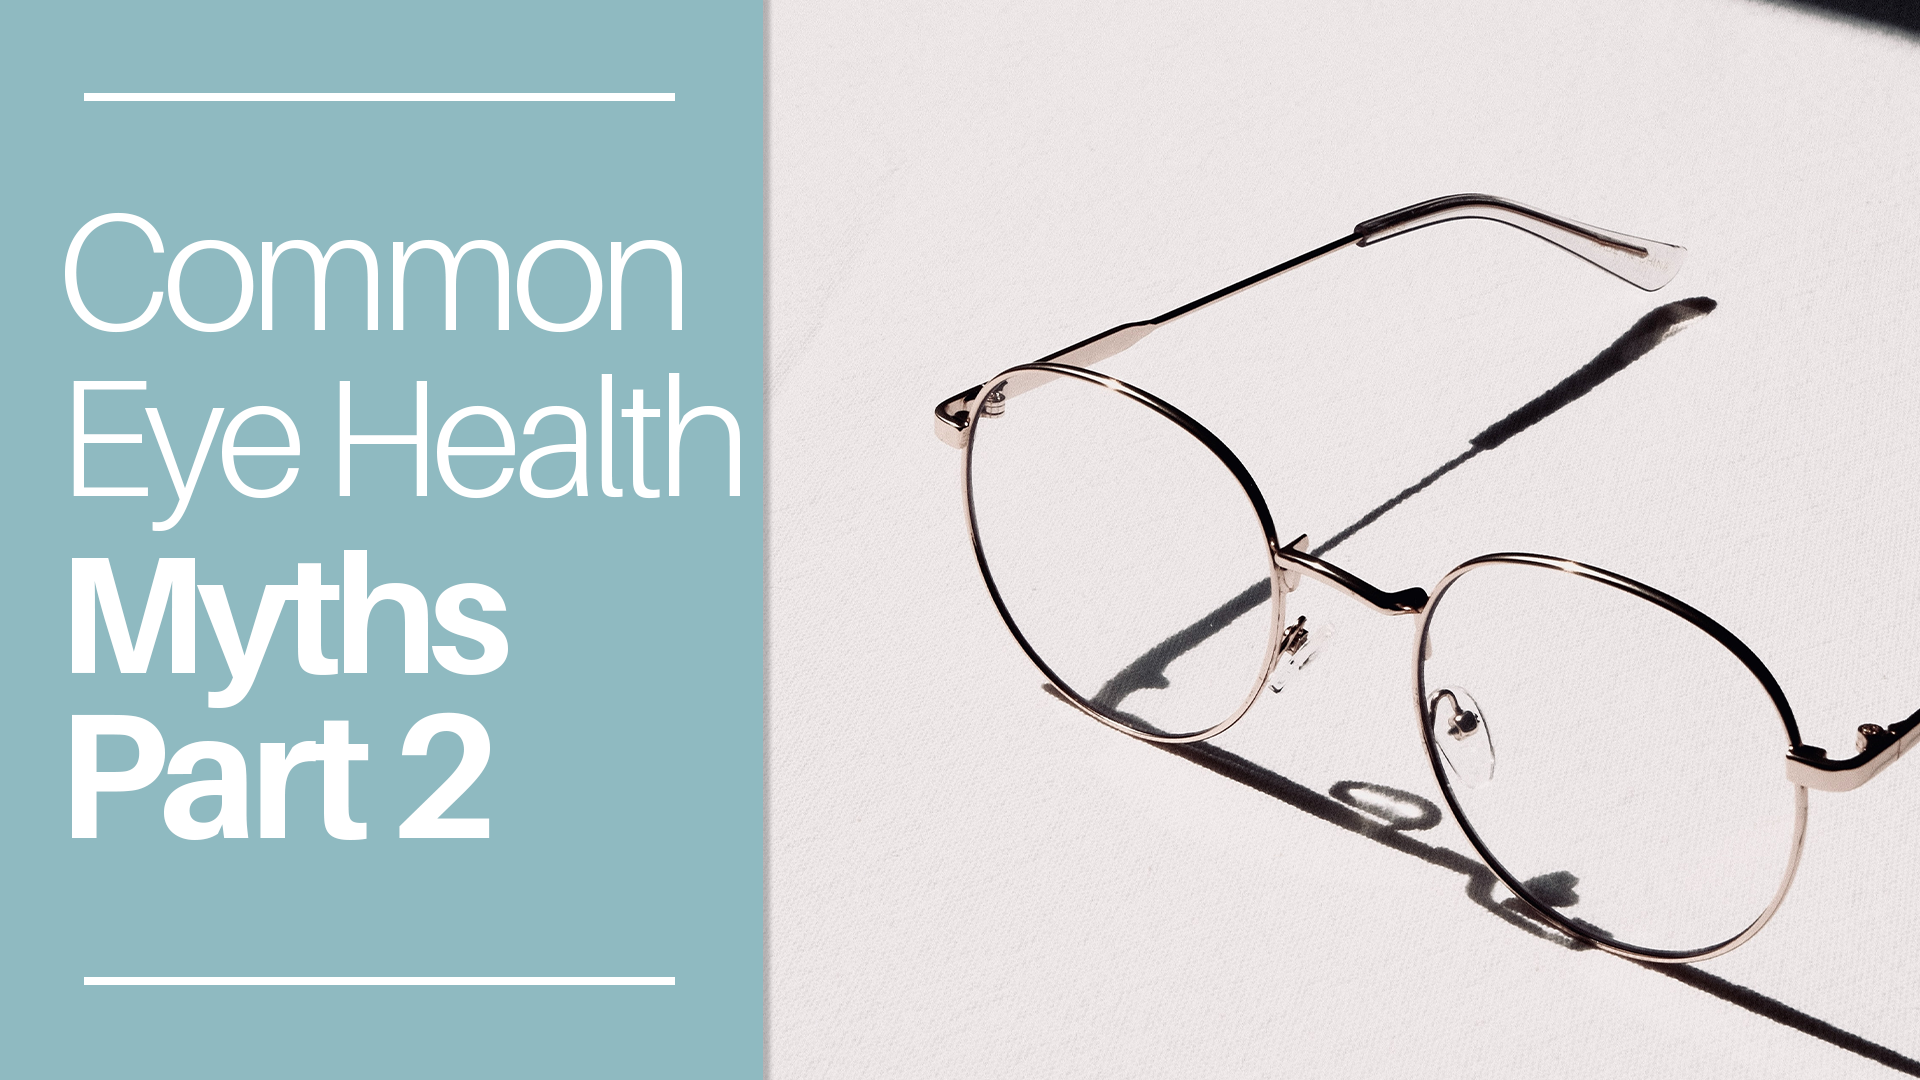 Common Eye Health Myths Part 2